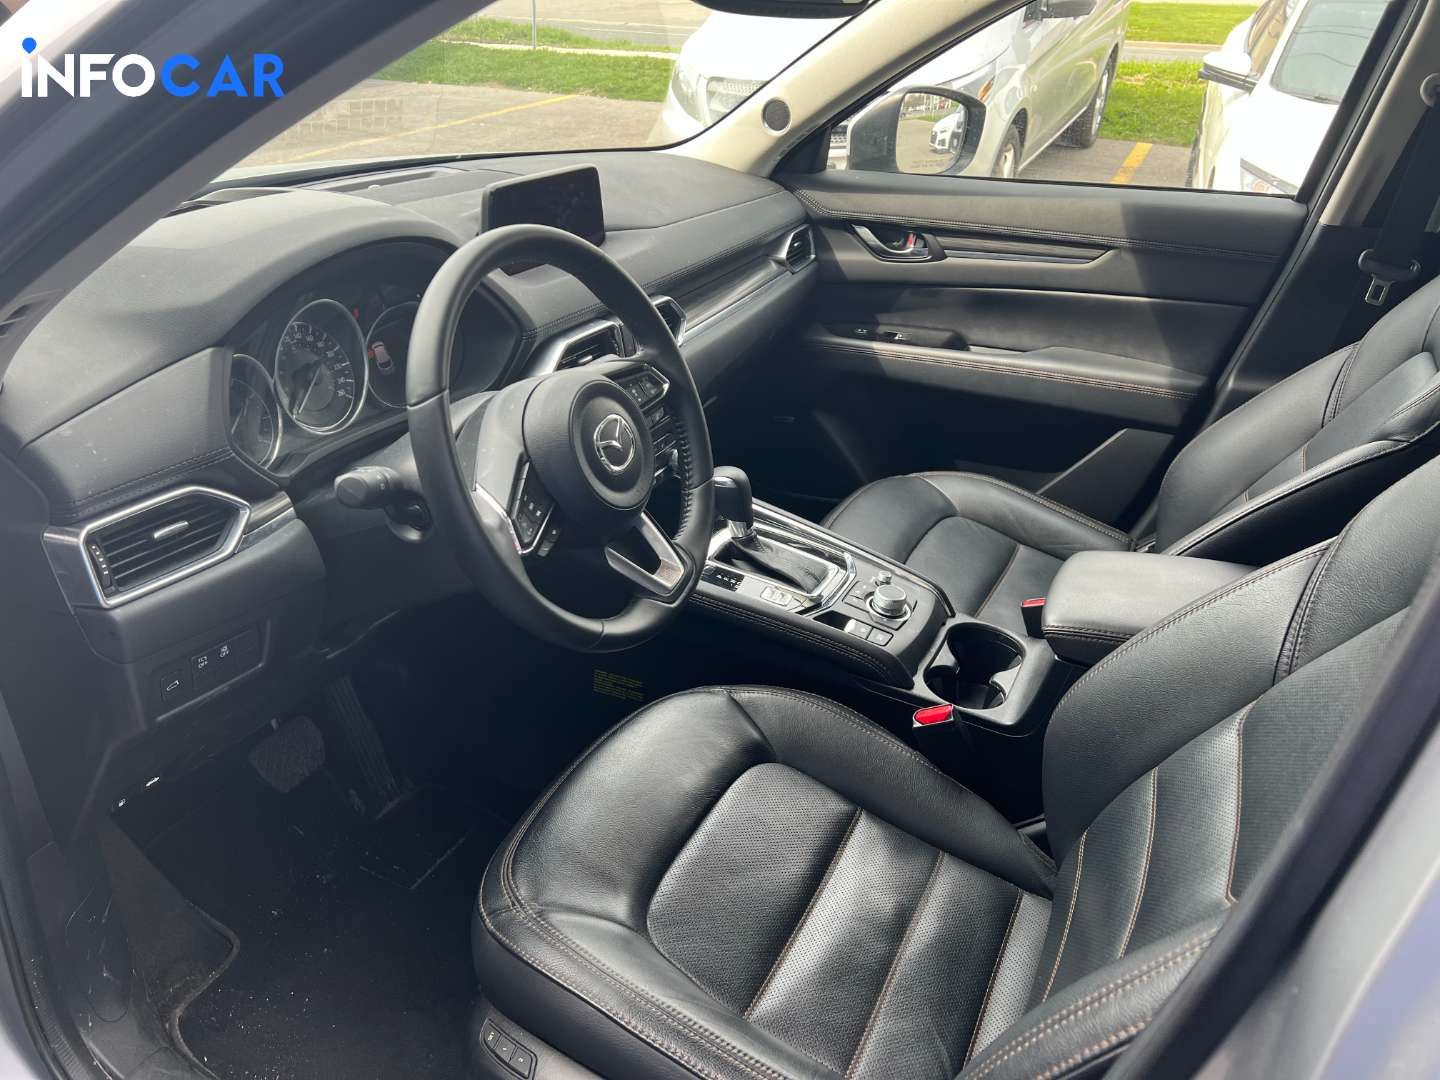 2019 Mazda CX-5 GT - INFOCAR - Toronto Auto Trading Platform